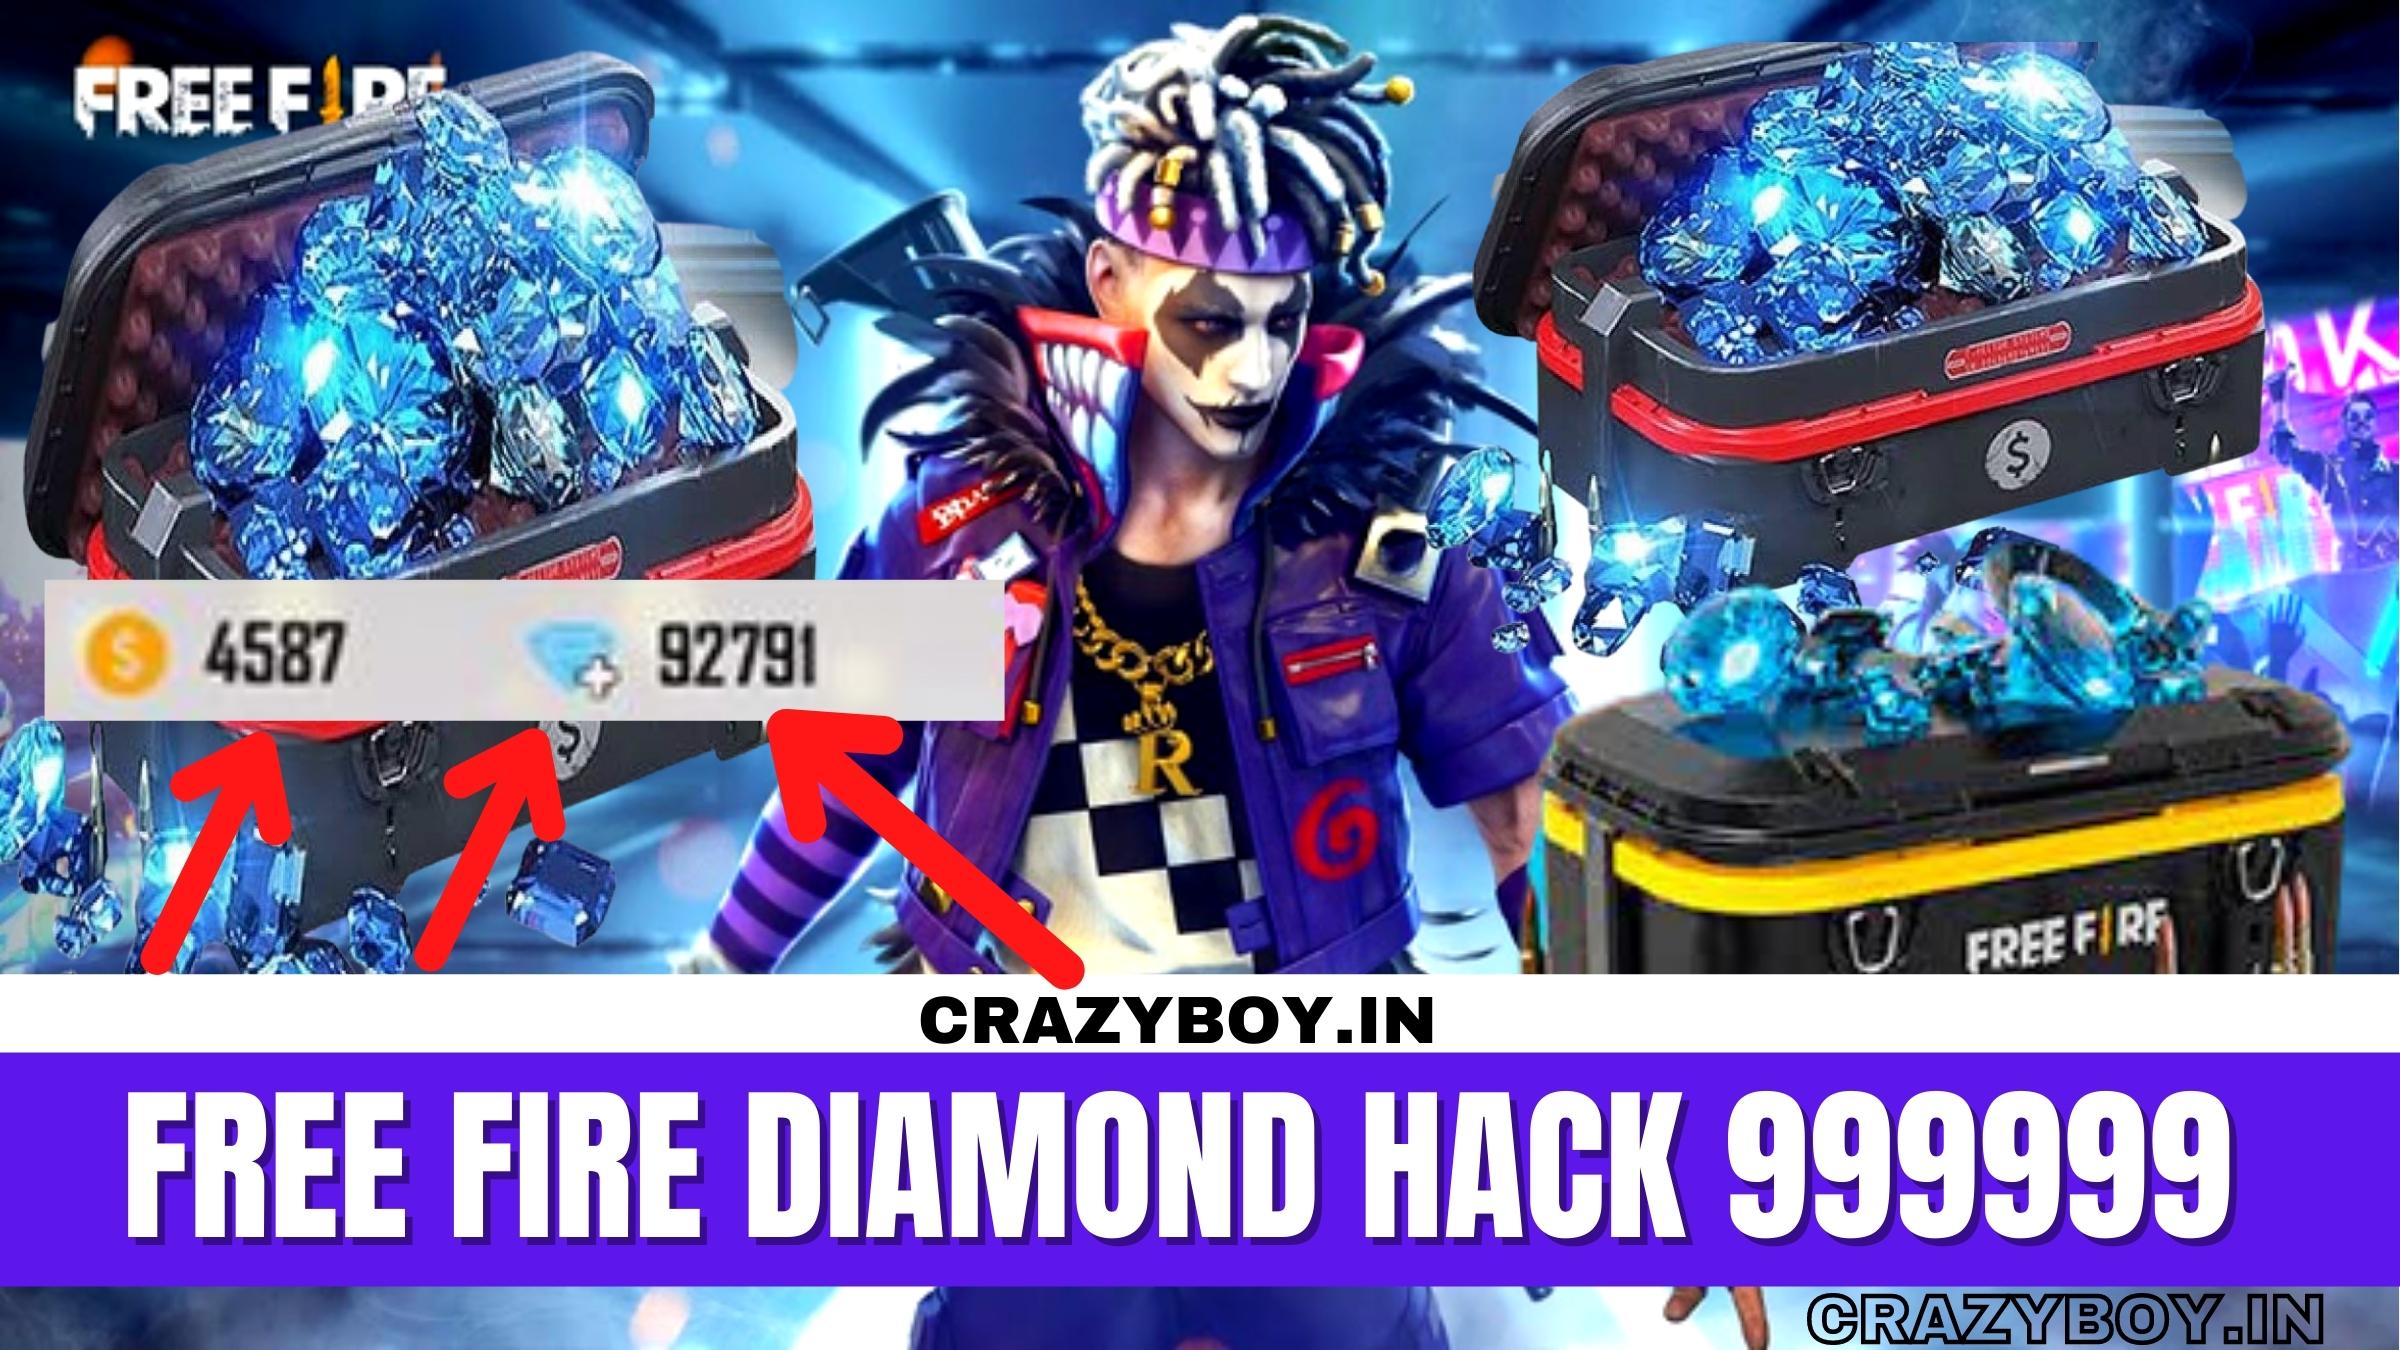 Free Fire diamond hack, Free Fire Unlimited Diamonds, Gold Coins, no verification no hack